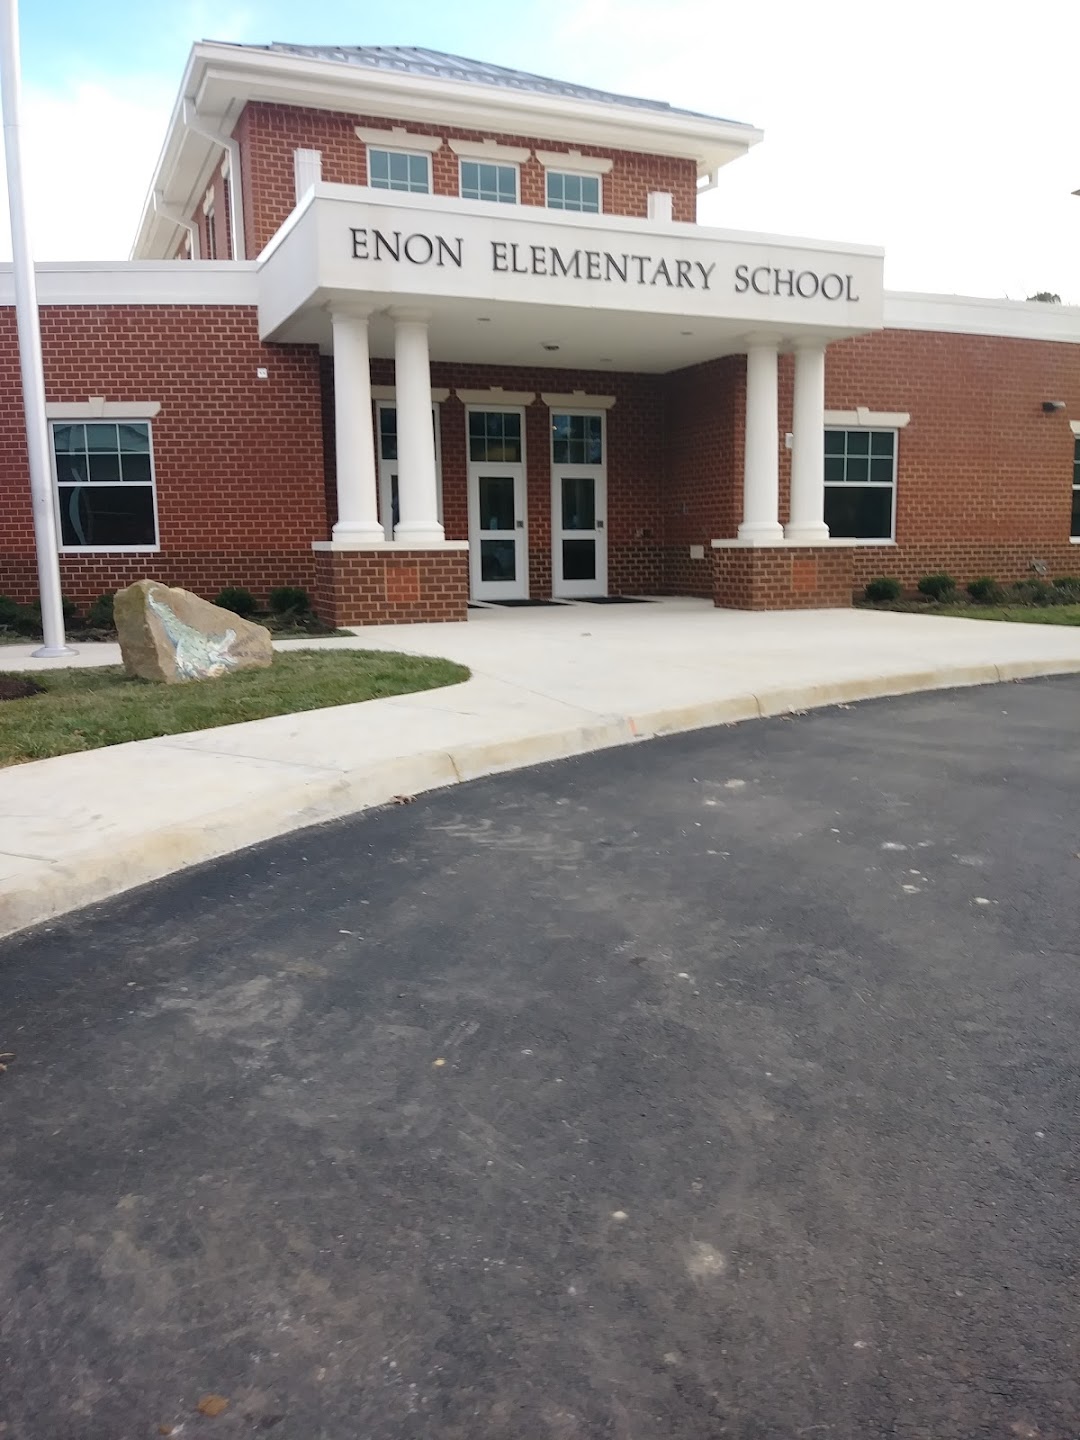 Enon Elementary School